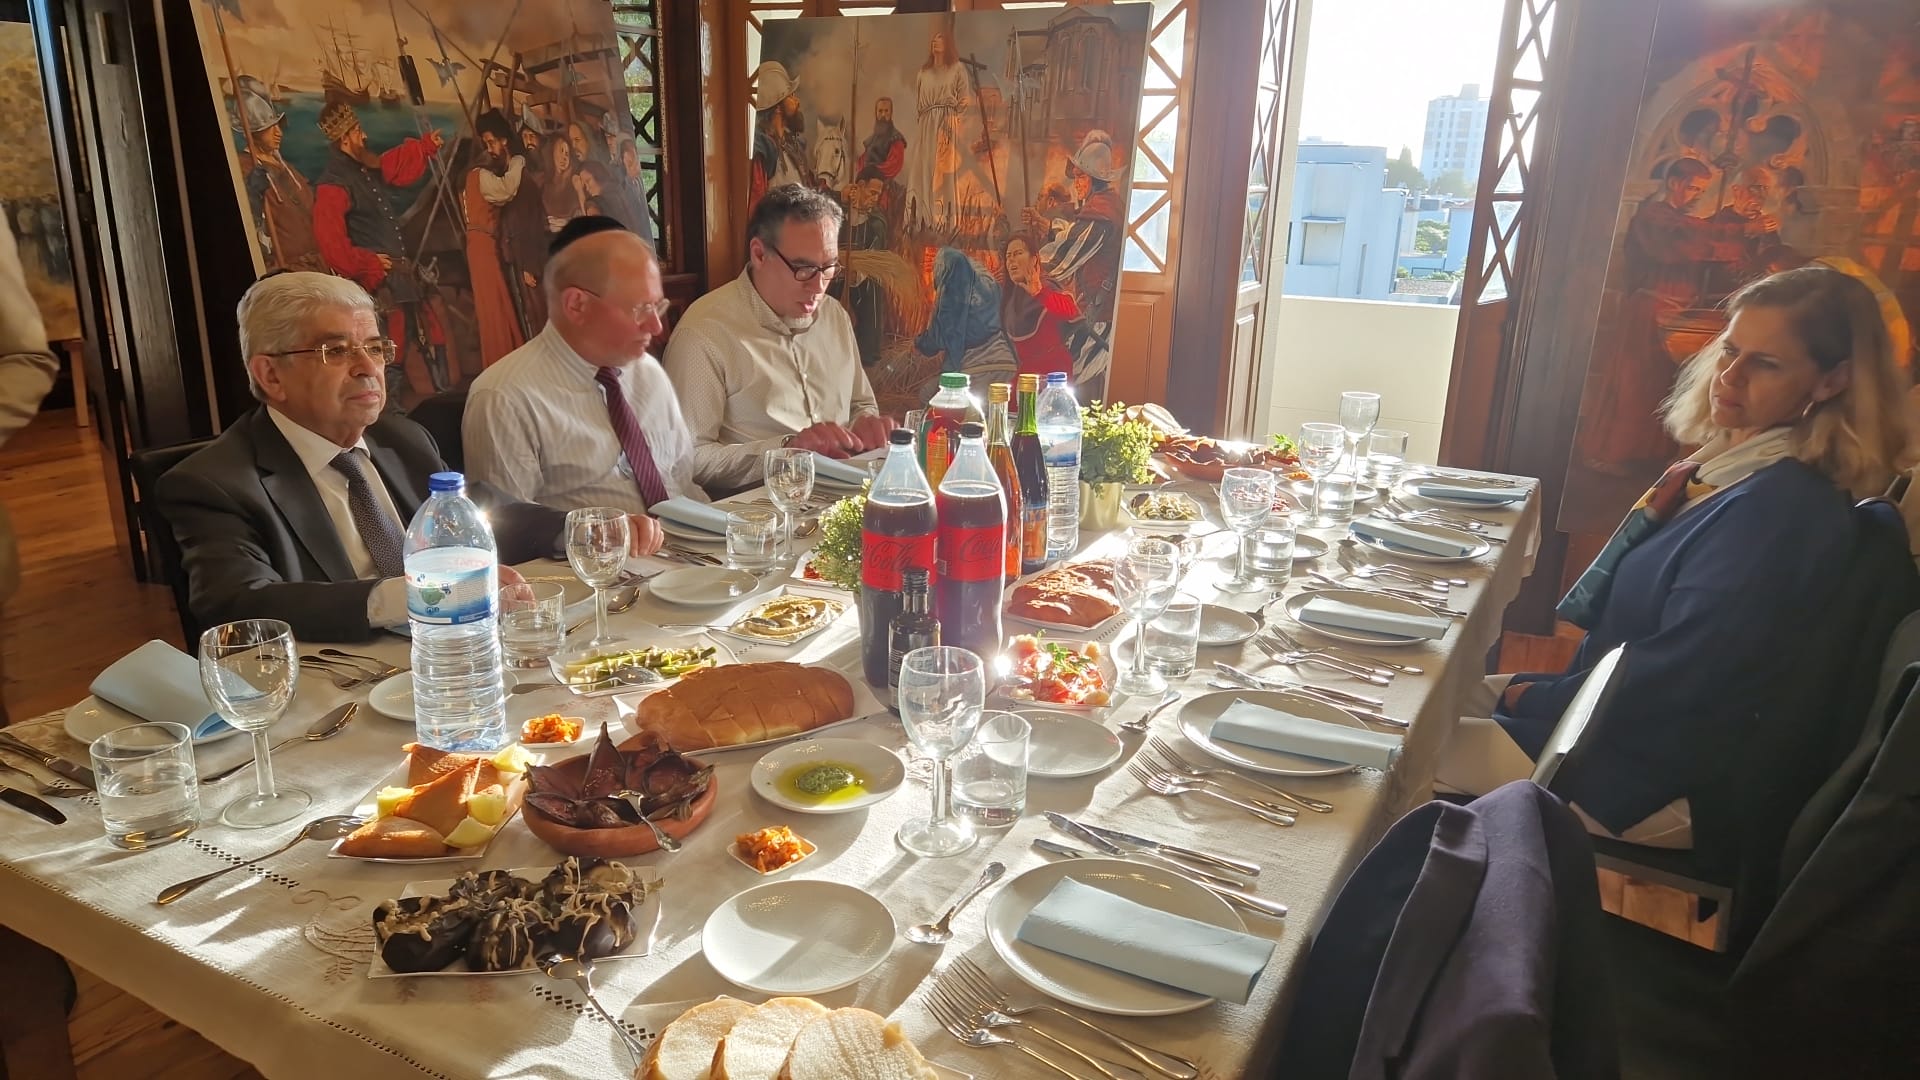 Jewish Community of Oporto receives representatives of the main faiths in Oporto